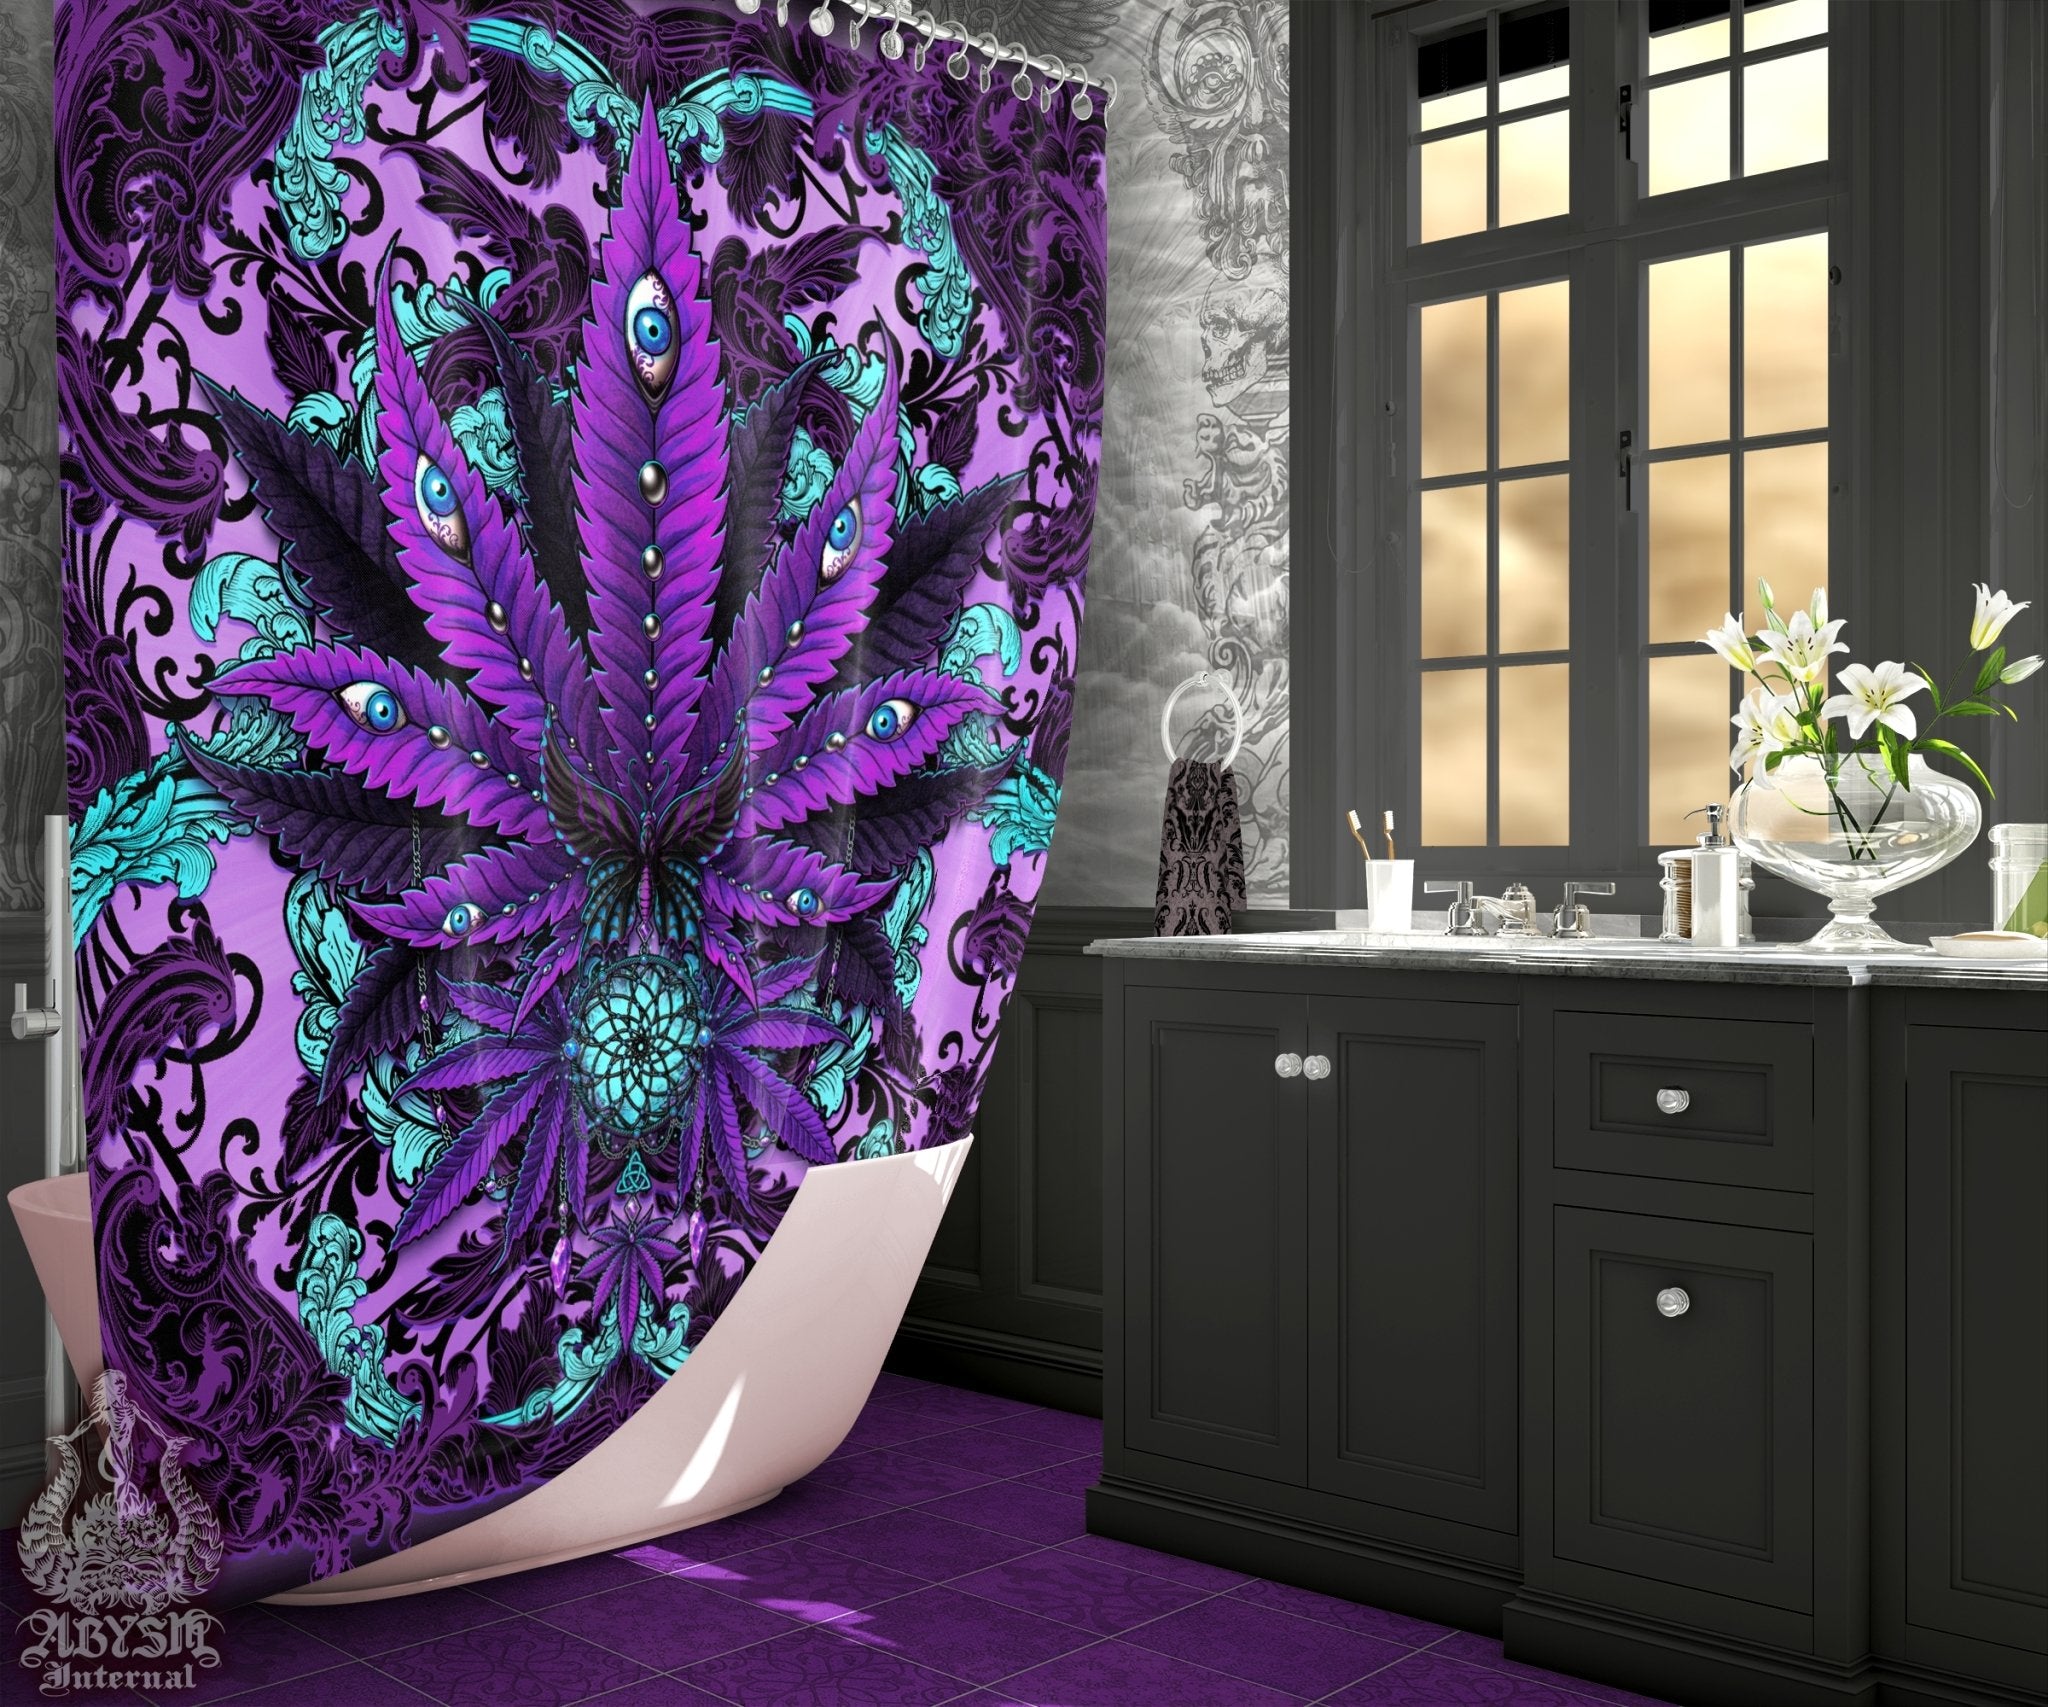 Weed Shower Curtain, Pastel Goth Bathroom Decor, Cannabis Print, Alternative 420 Home Art - Marijuana - Abysm Internal